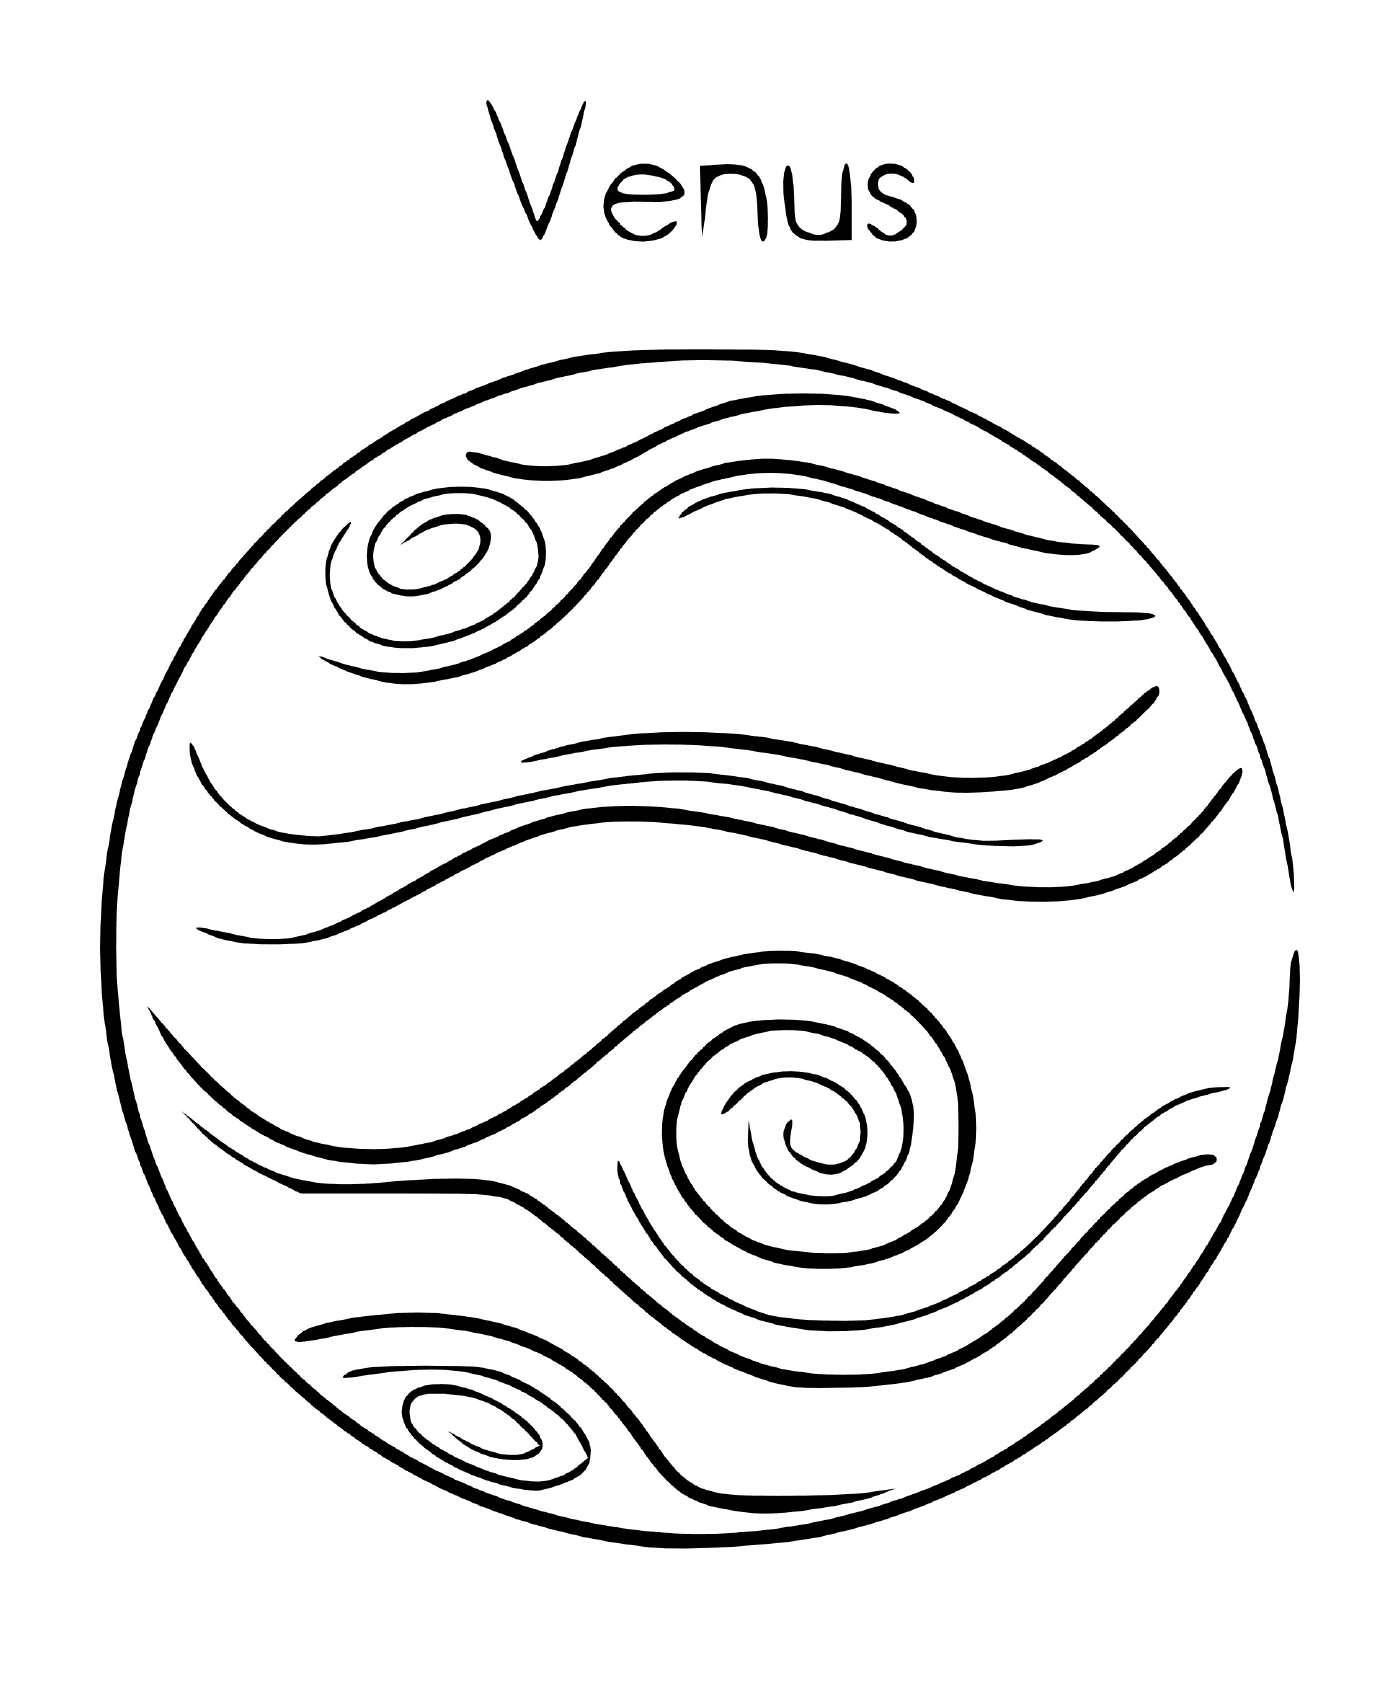  Planet Venus in orbit 